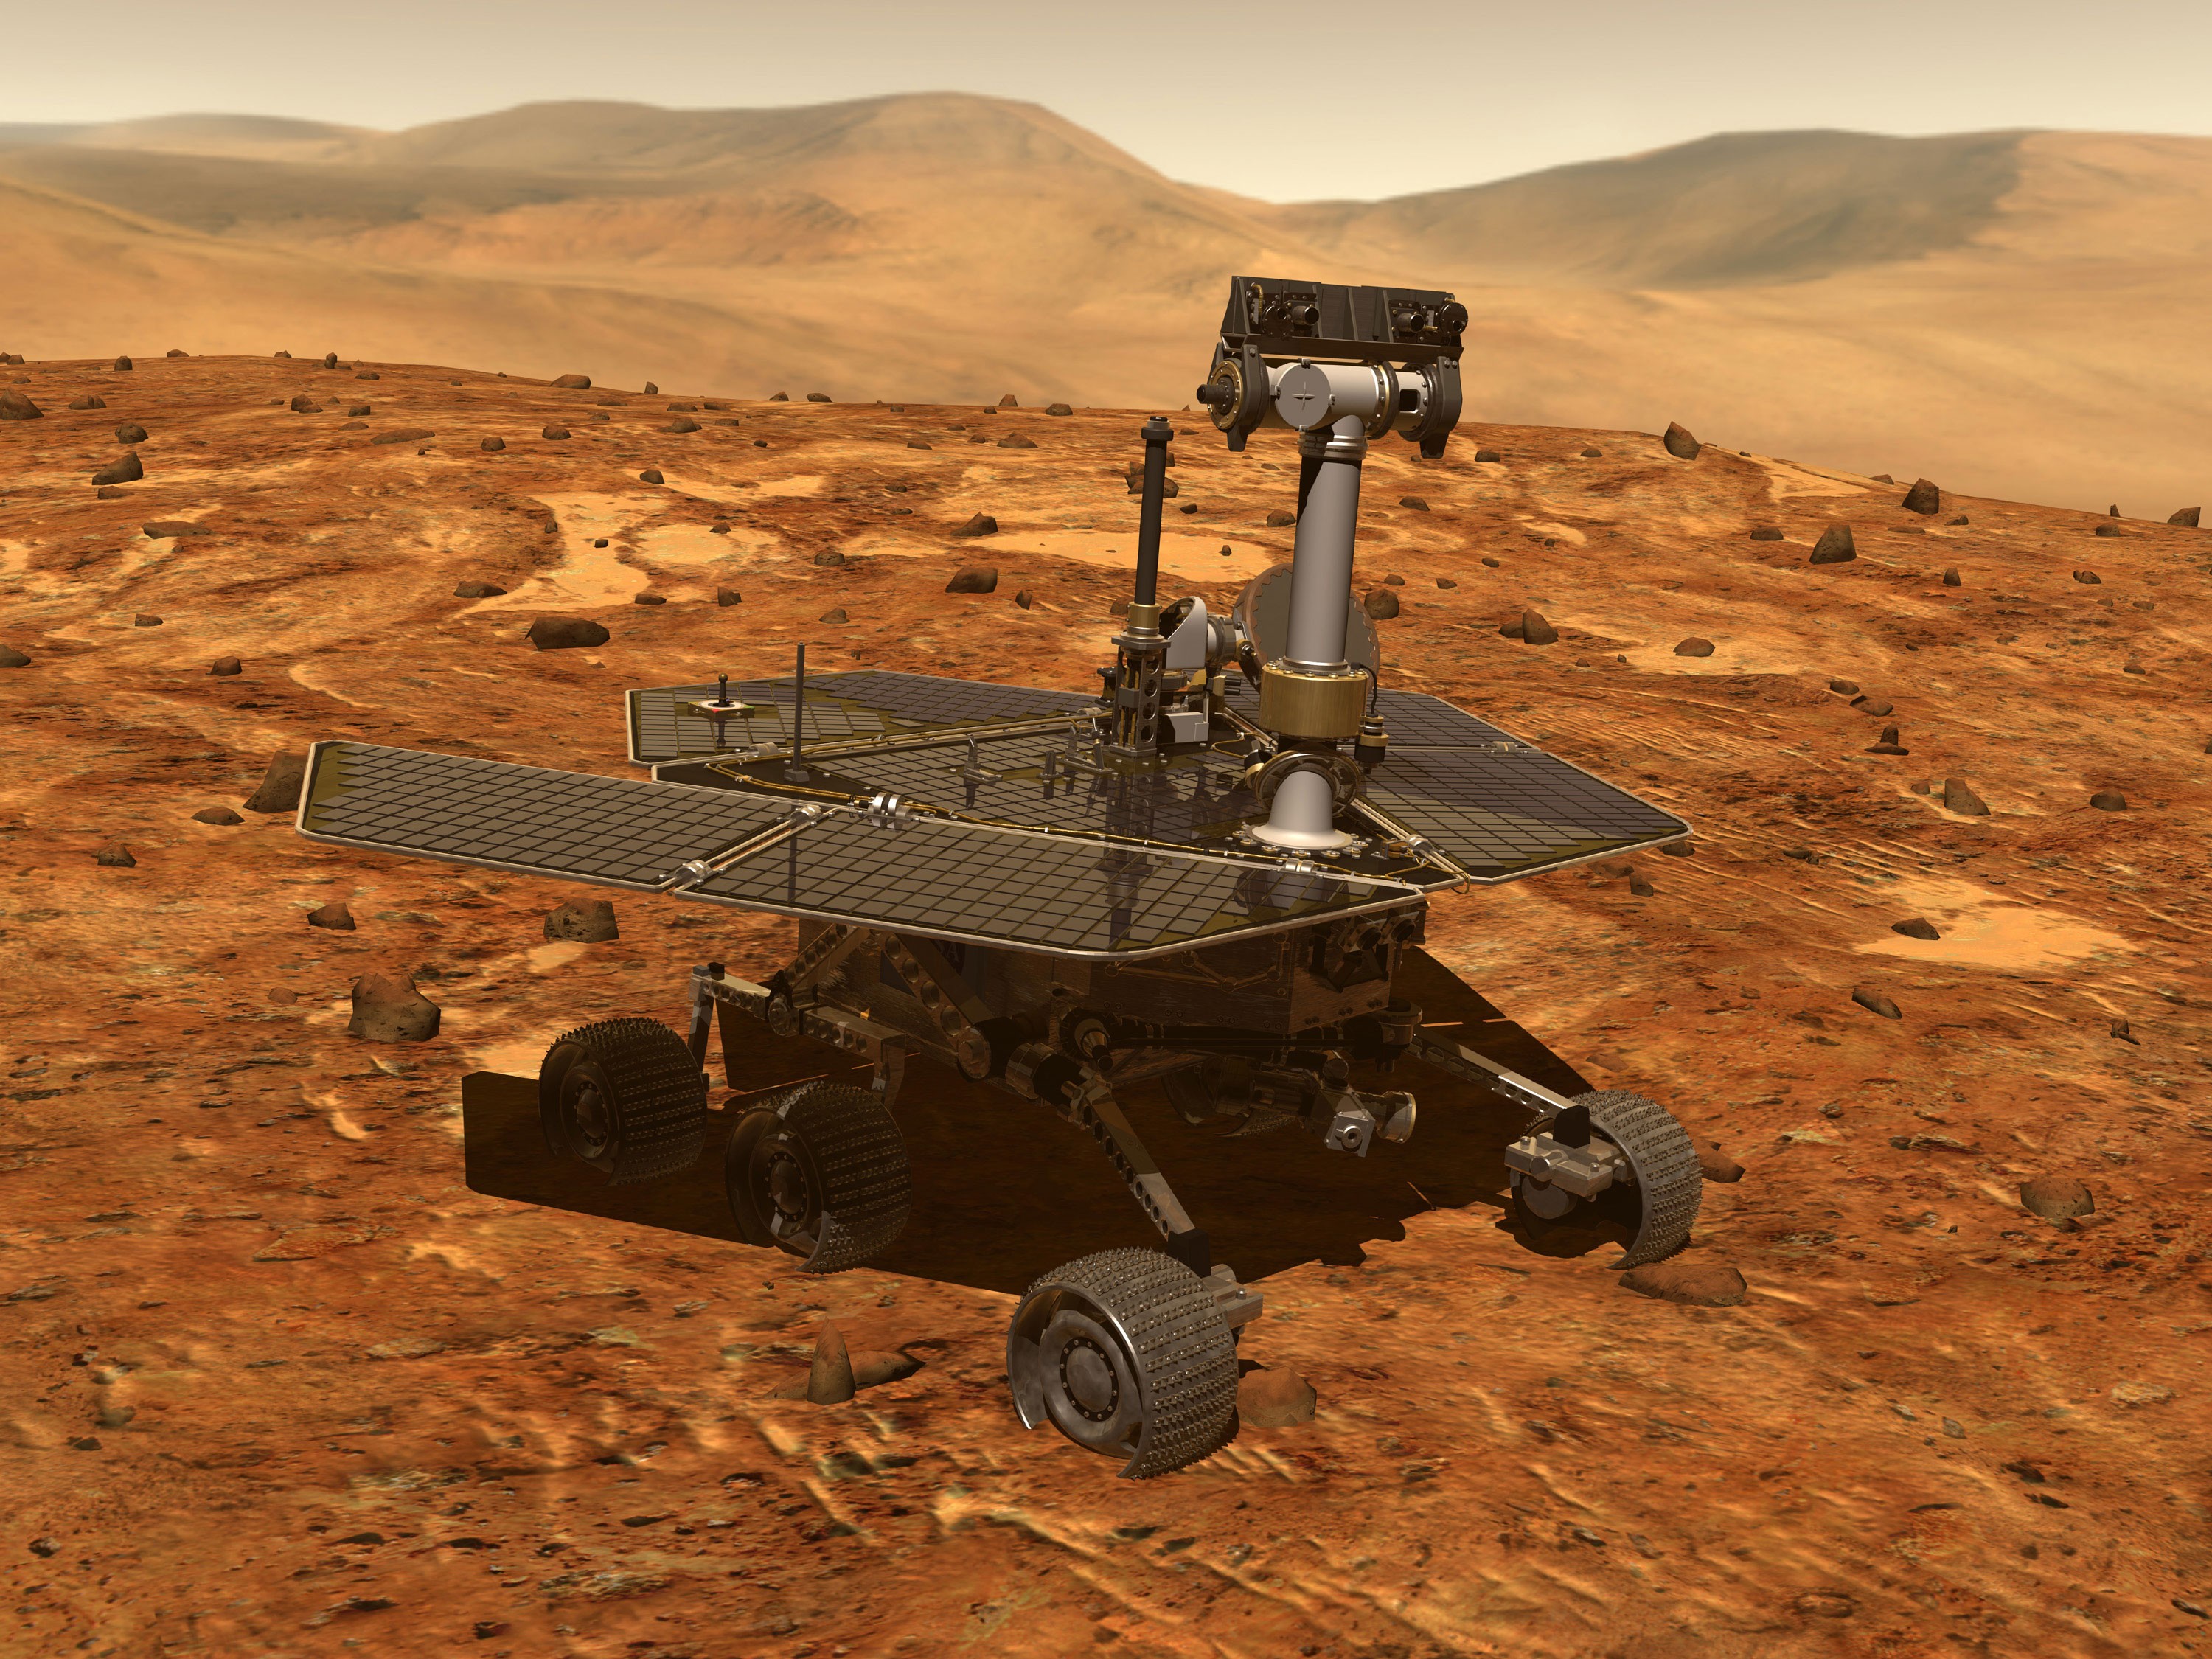 El rover “Opportunity” en Marte rompe récord mundial